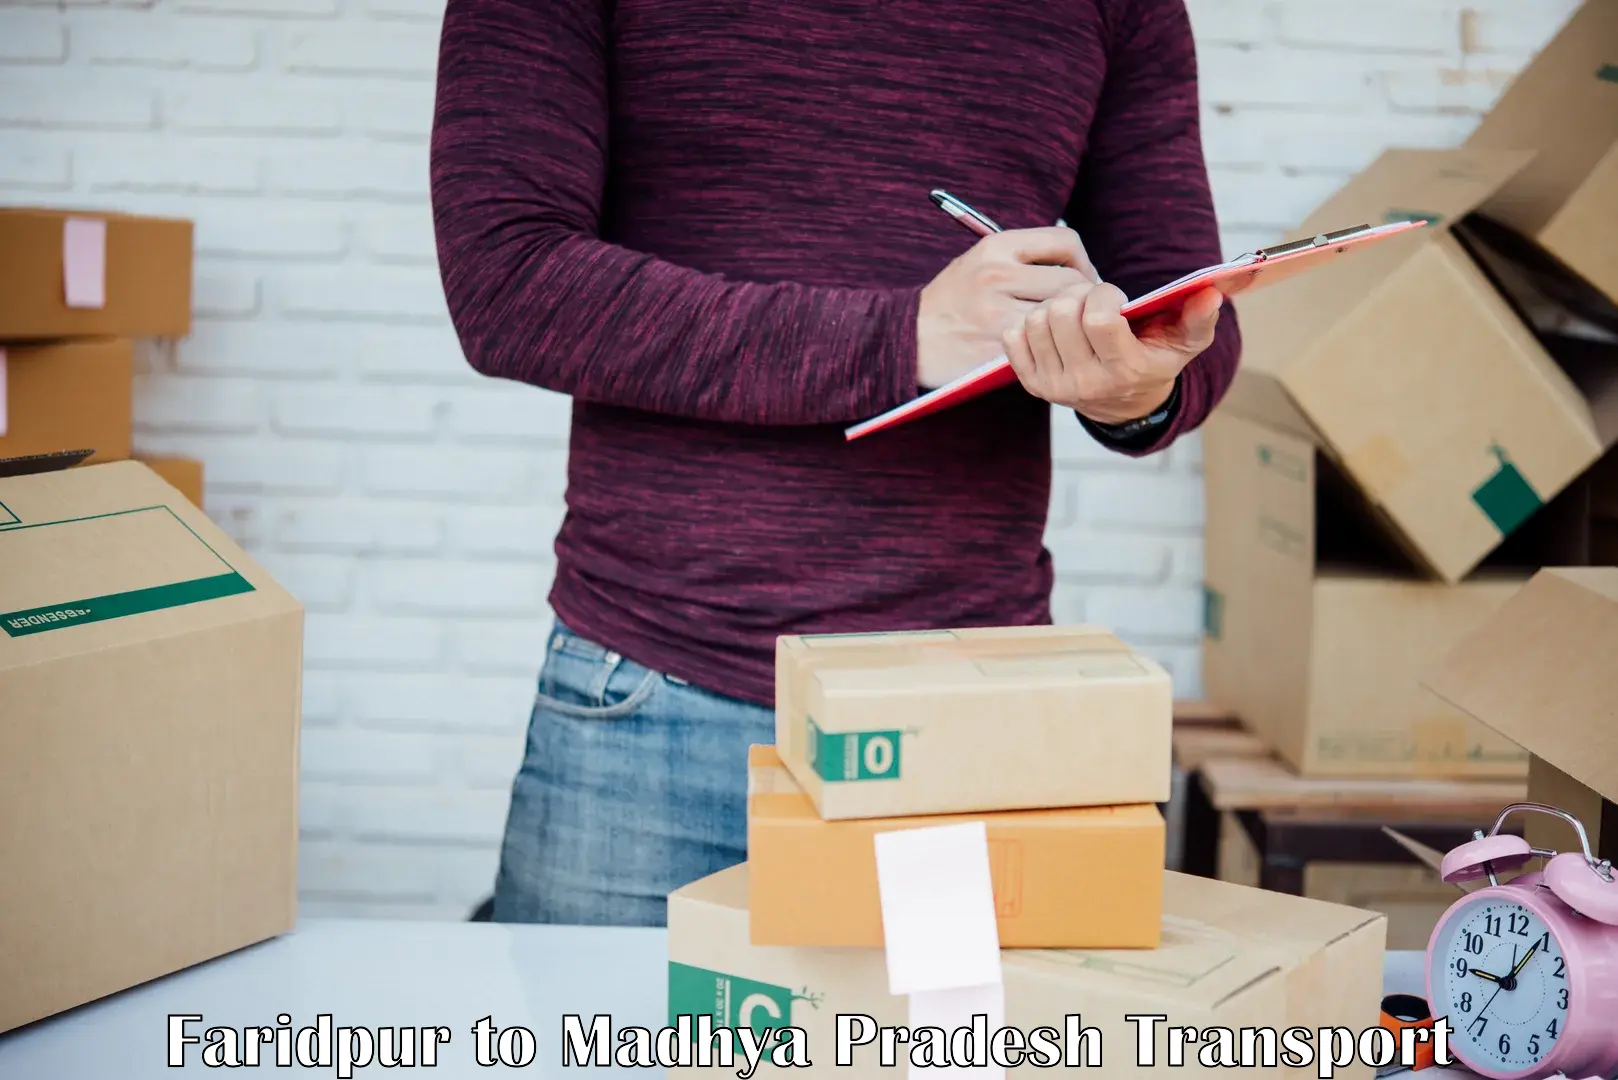 Goods delivery service Faridpur to Chhatarpur